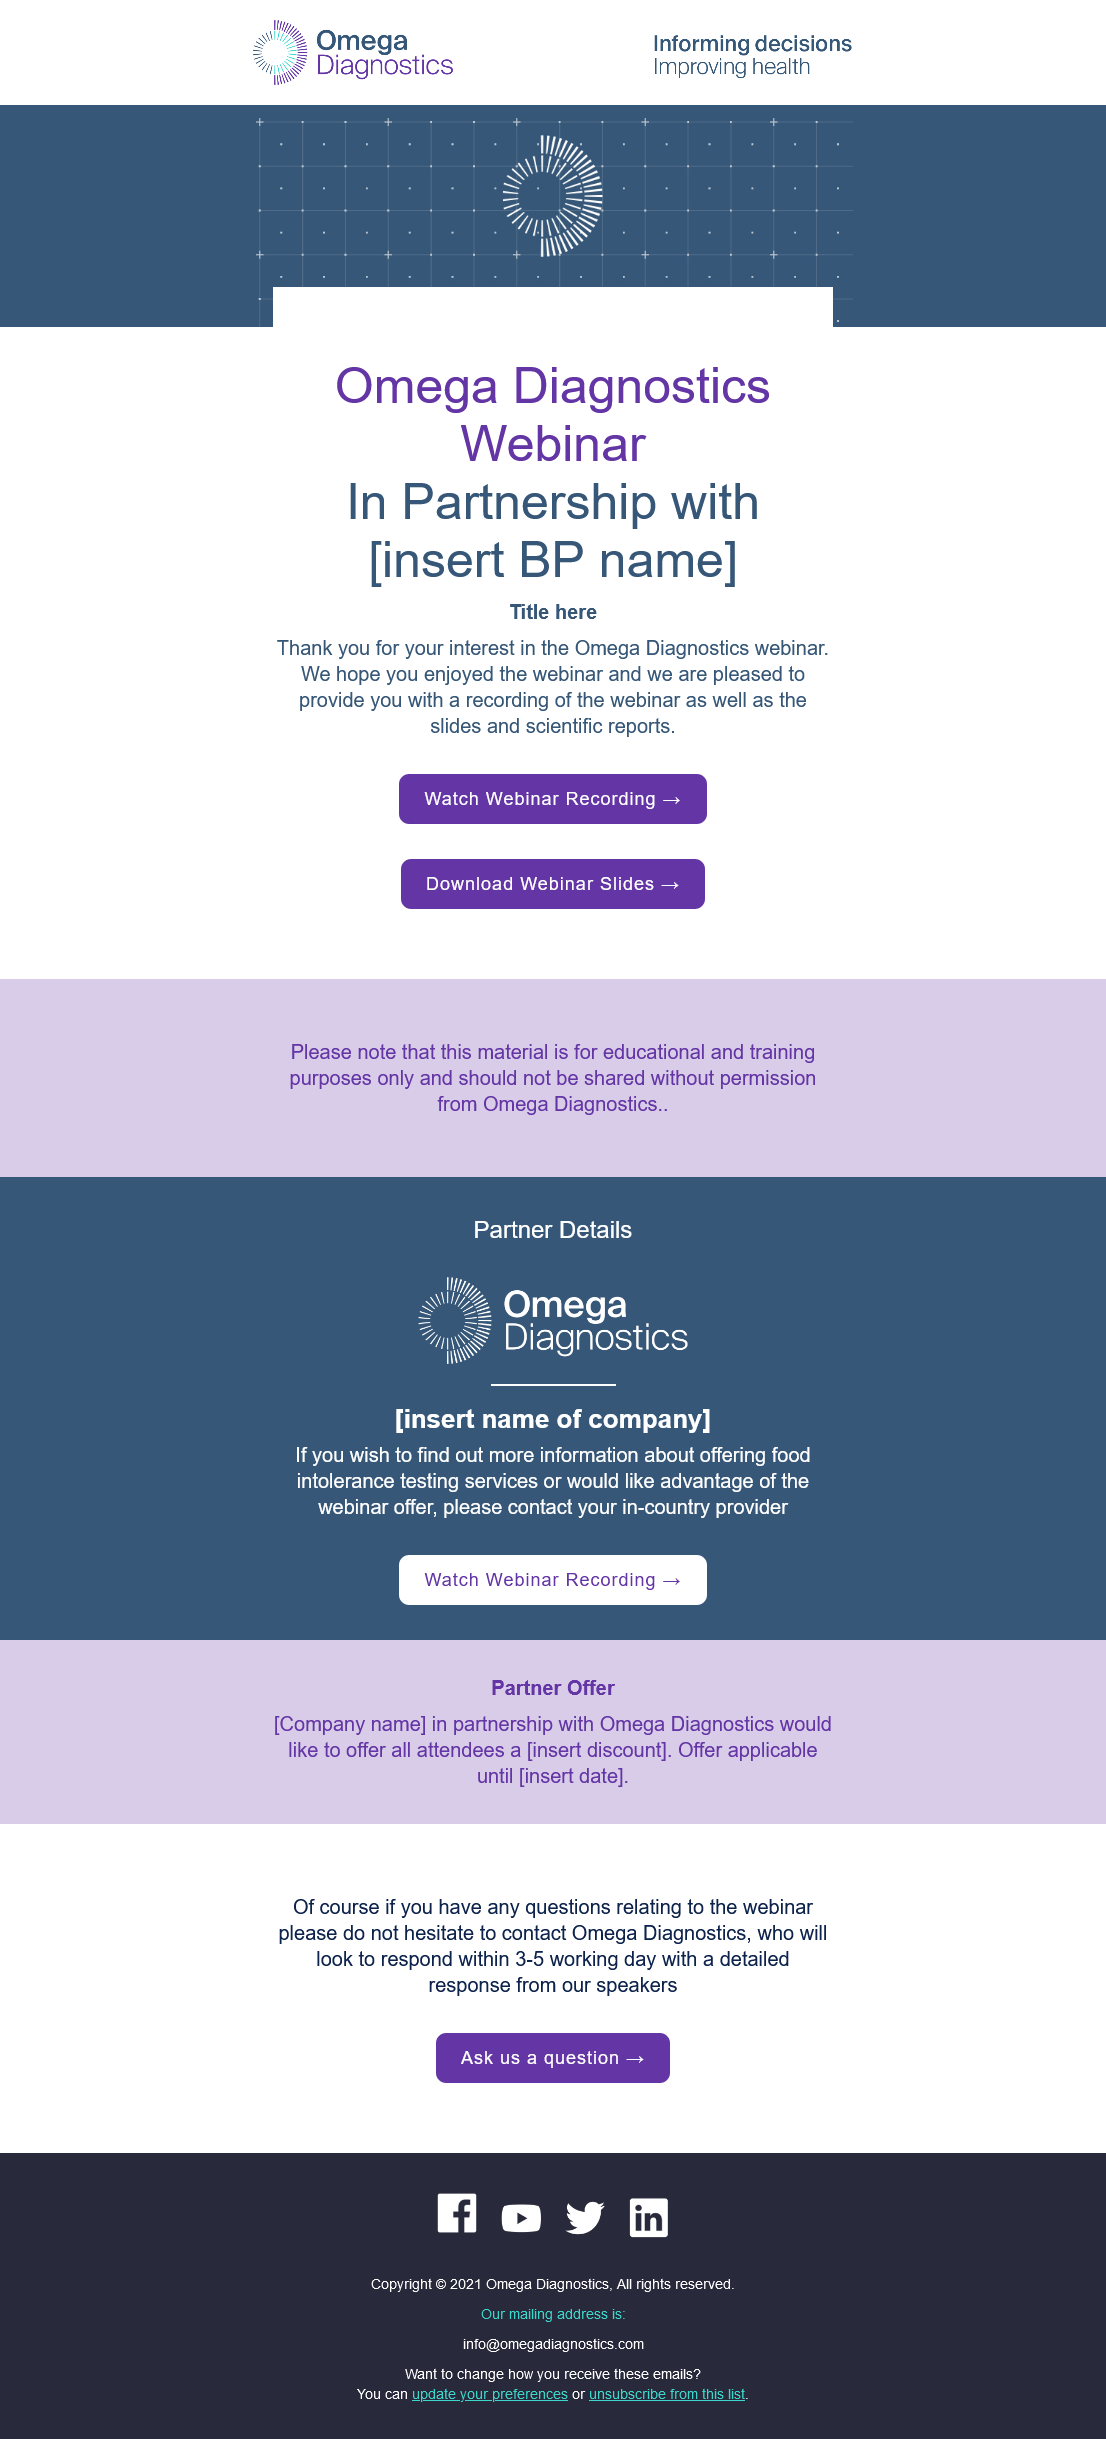 Email Templates Created For Omega Diagnostics Marketing Health desktop design